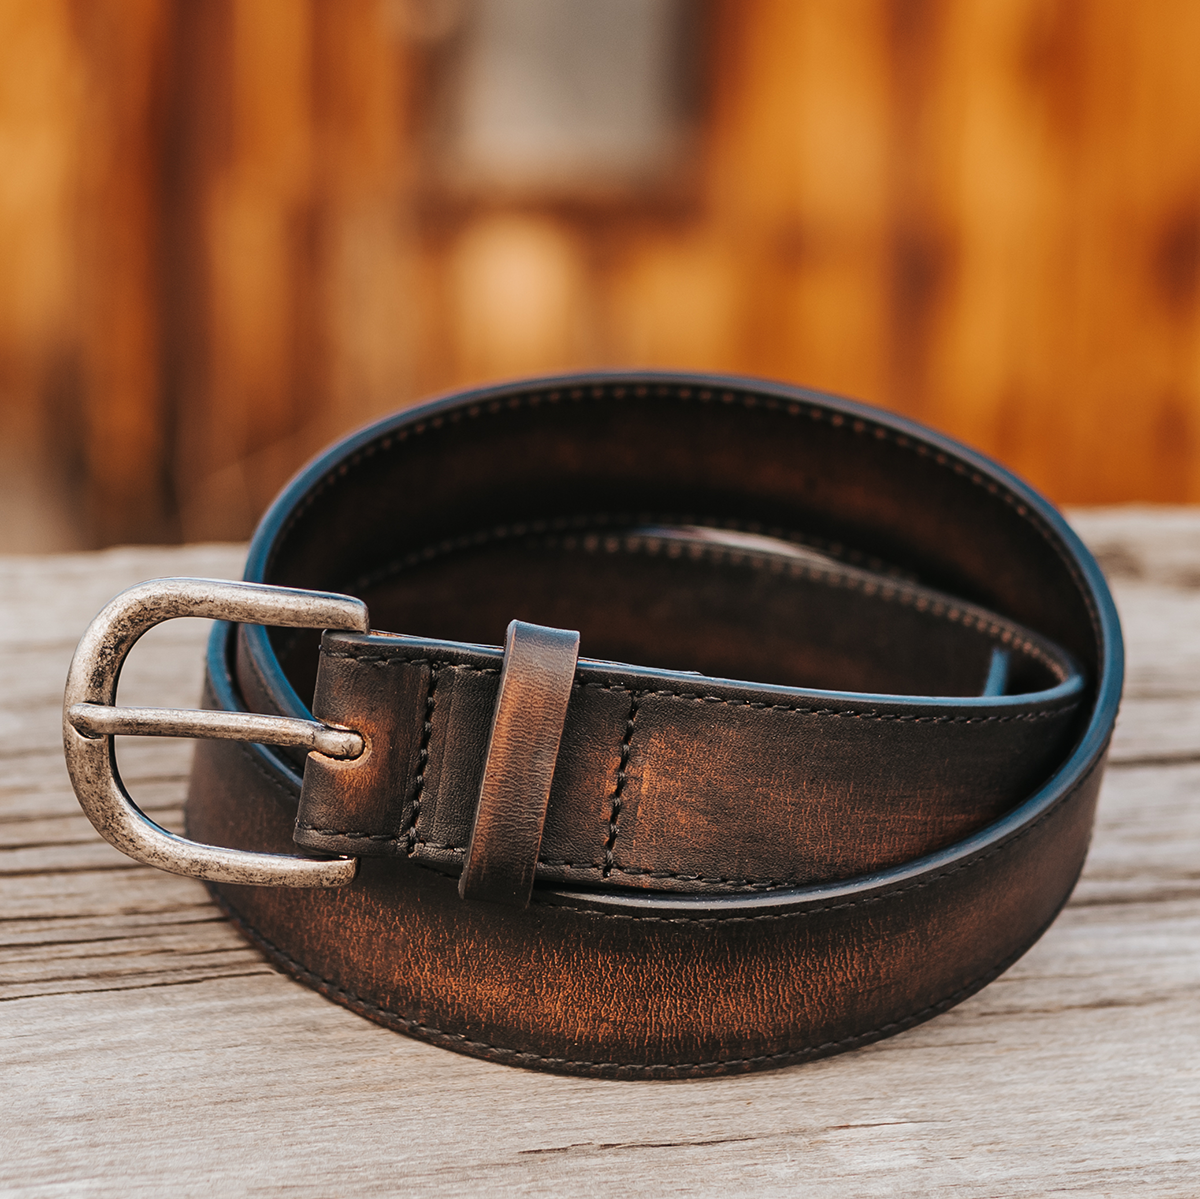 FREEBIRD Classic black distressed full grain leather belt featuring silver buckle hardware